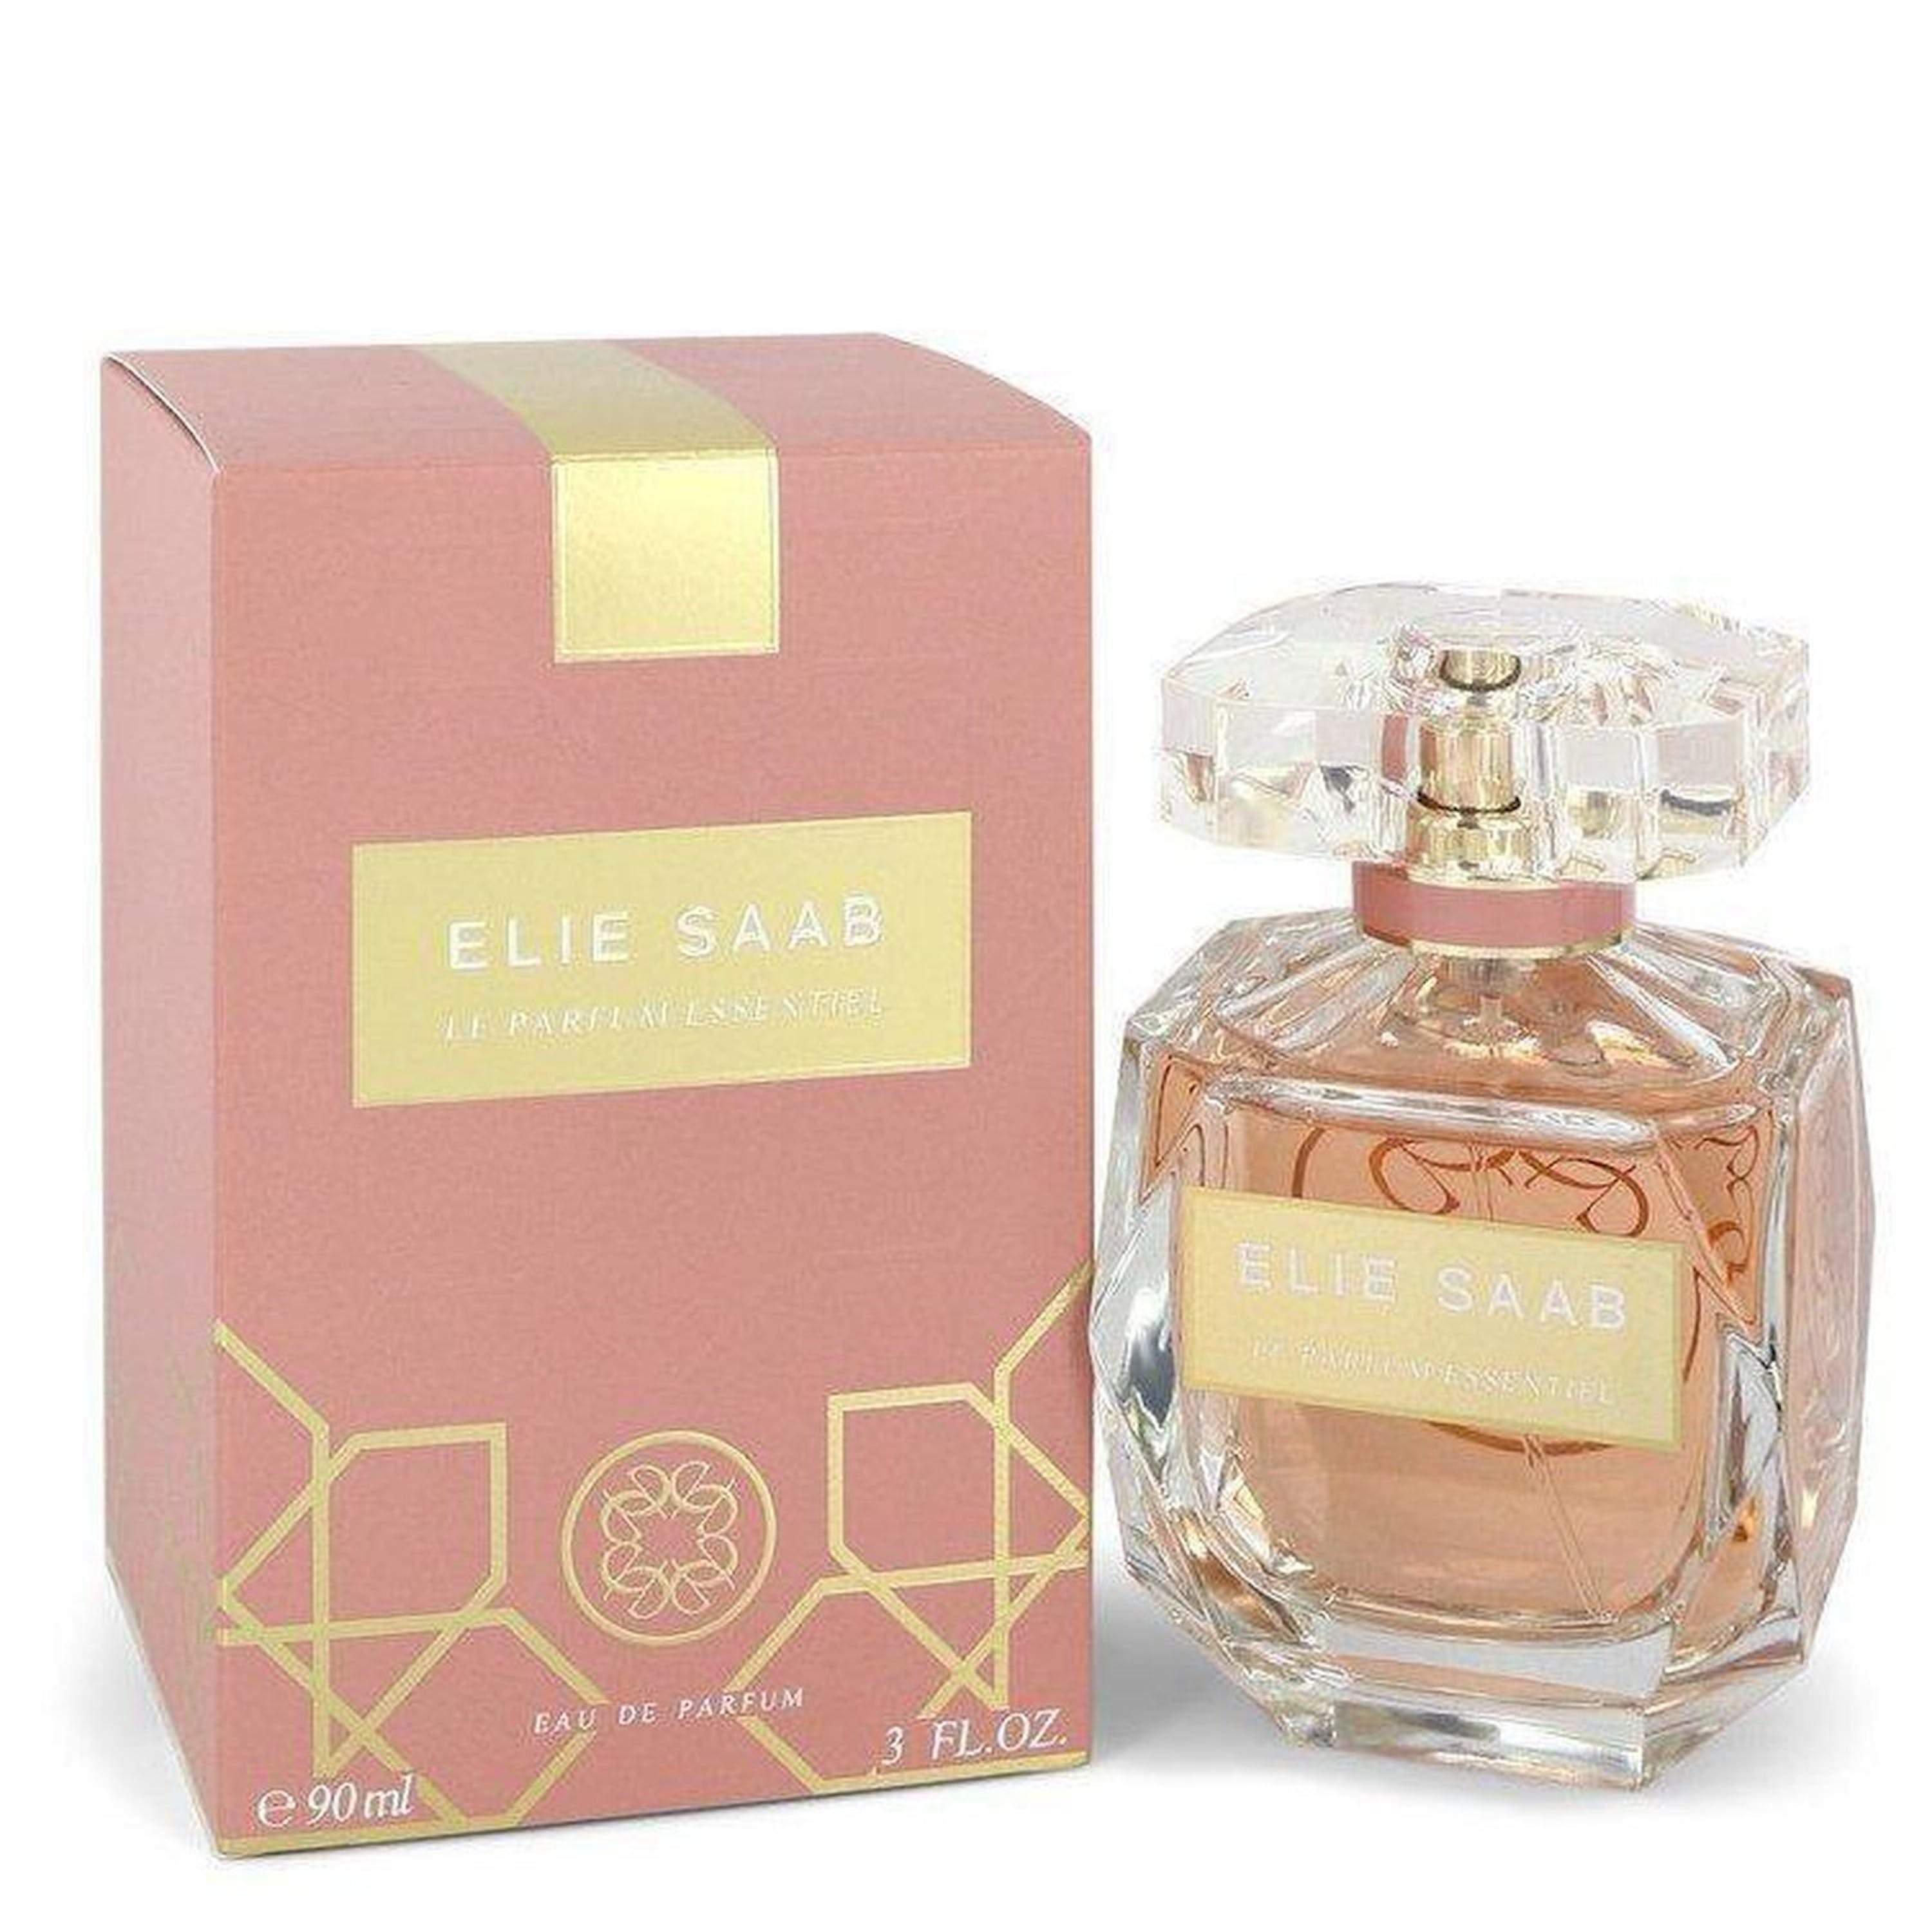 Elie Saab Le Parfum Essentiel Eau de Parfum 90ml, & 50ml Spray - Peacock Bazaar